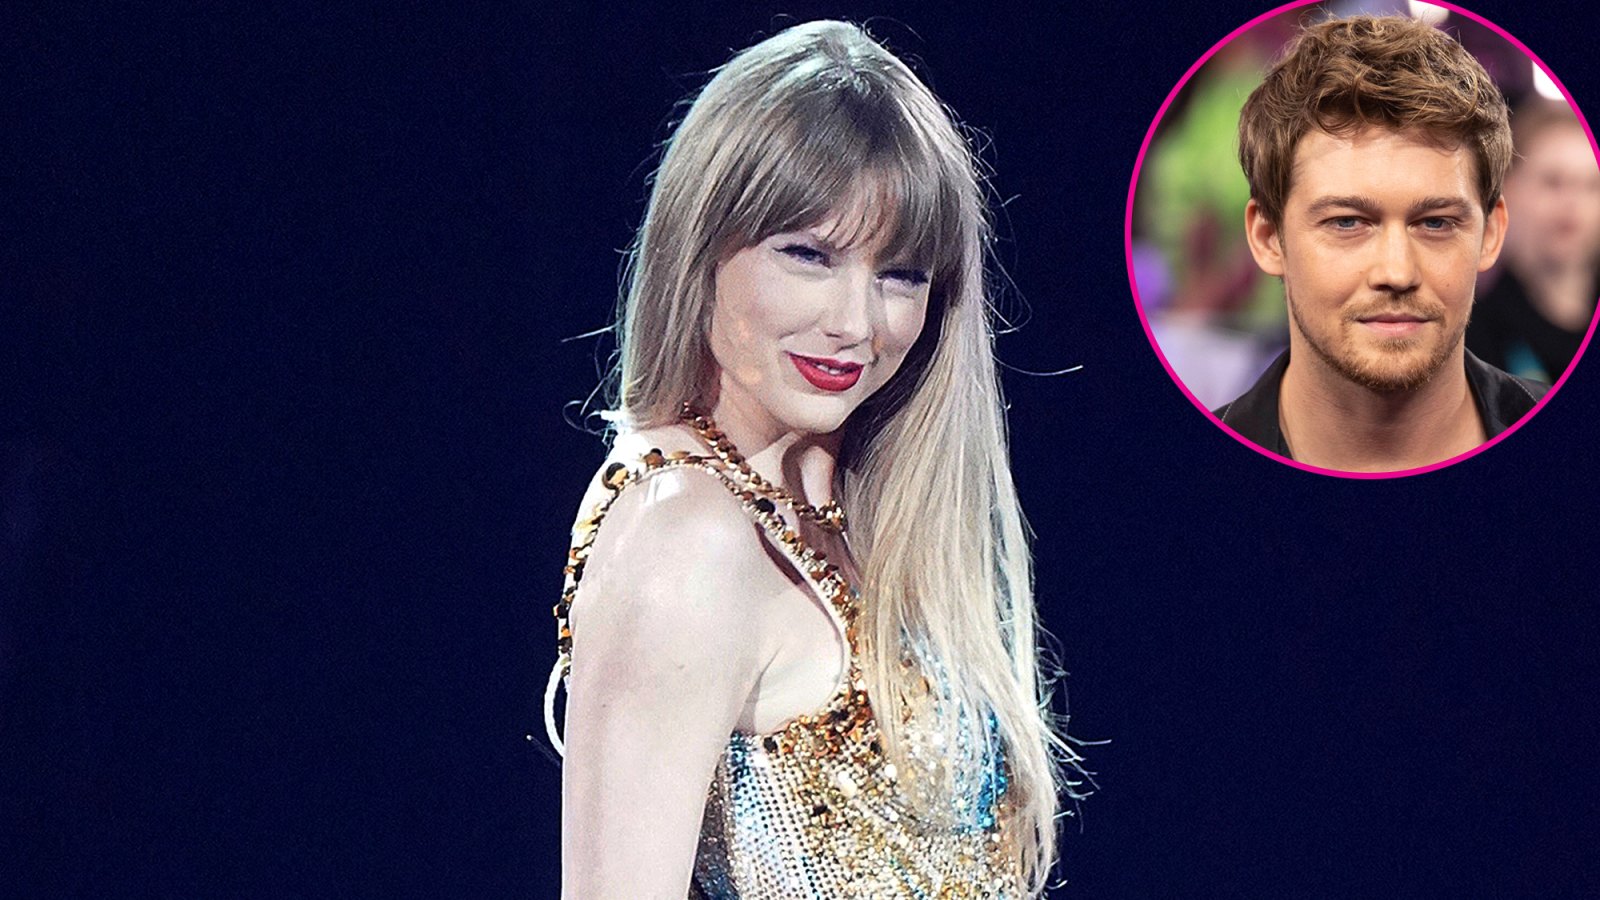 Taylor Swift Returns to Social Media After Joe Alwyn Split: 'Still Buzzing' From Tampa 'Eras Tour'